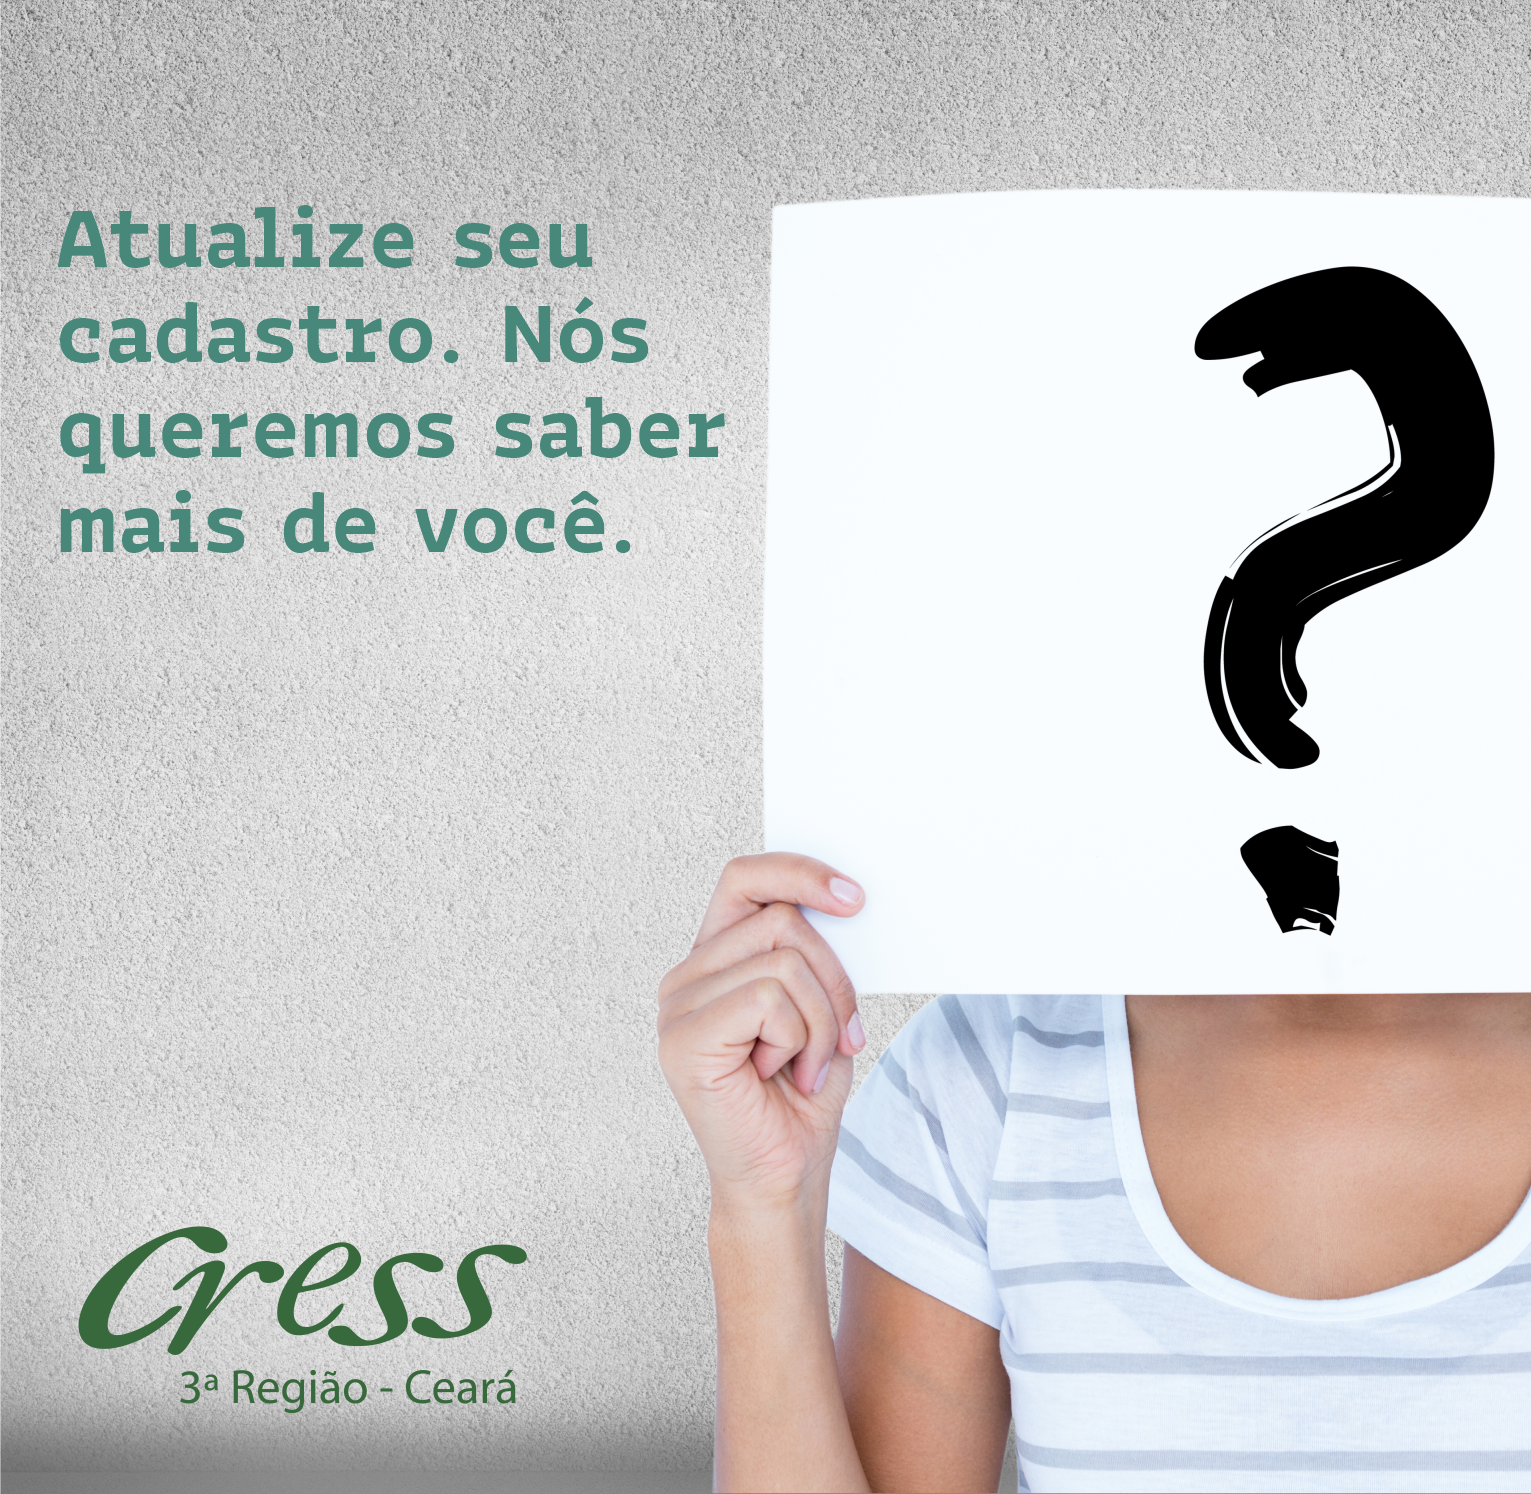 Cress Ceará (@cressceara) / X